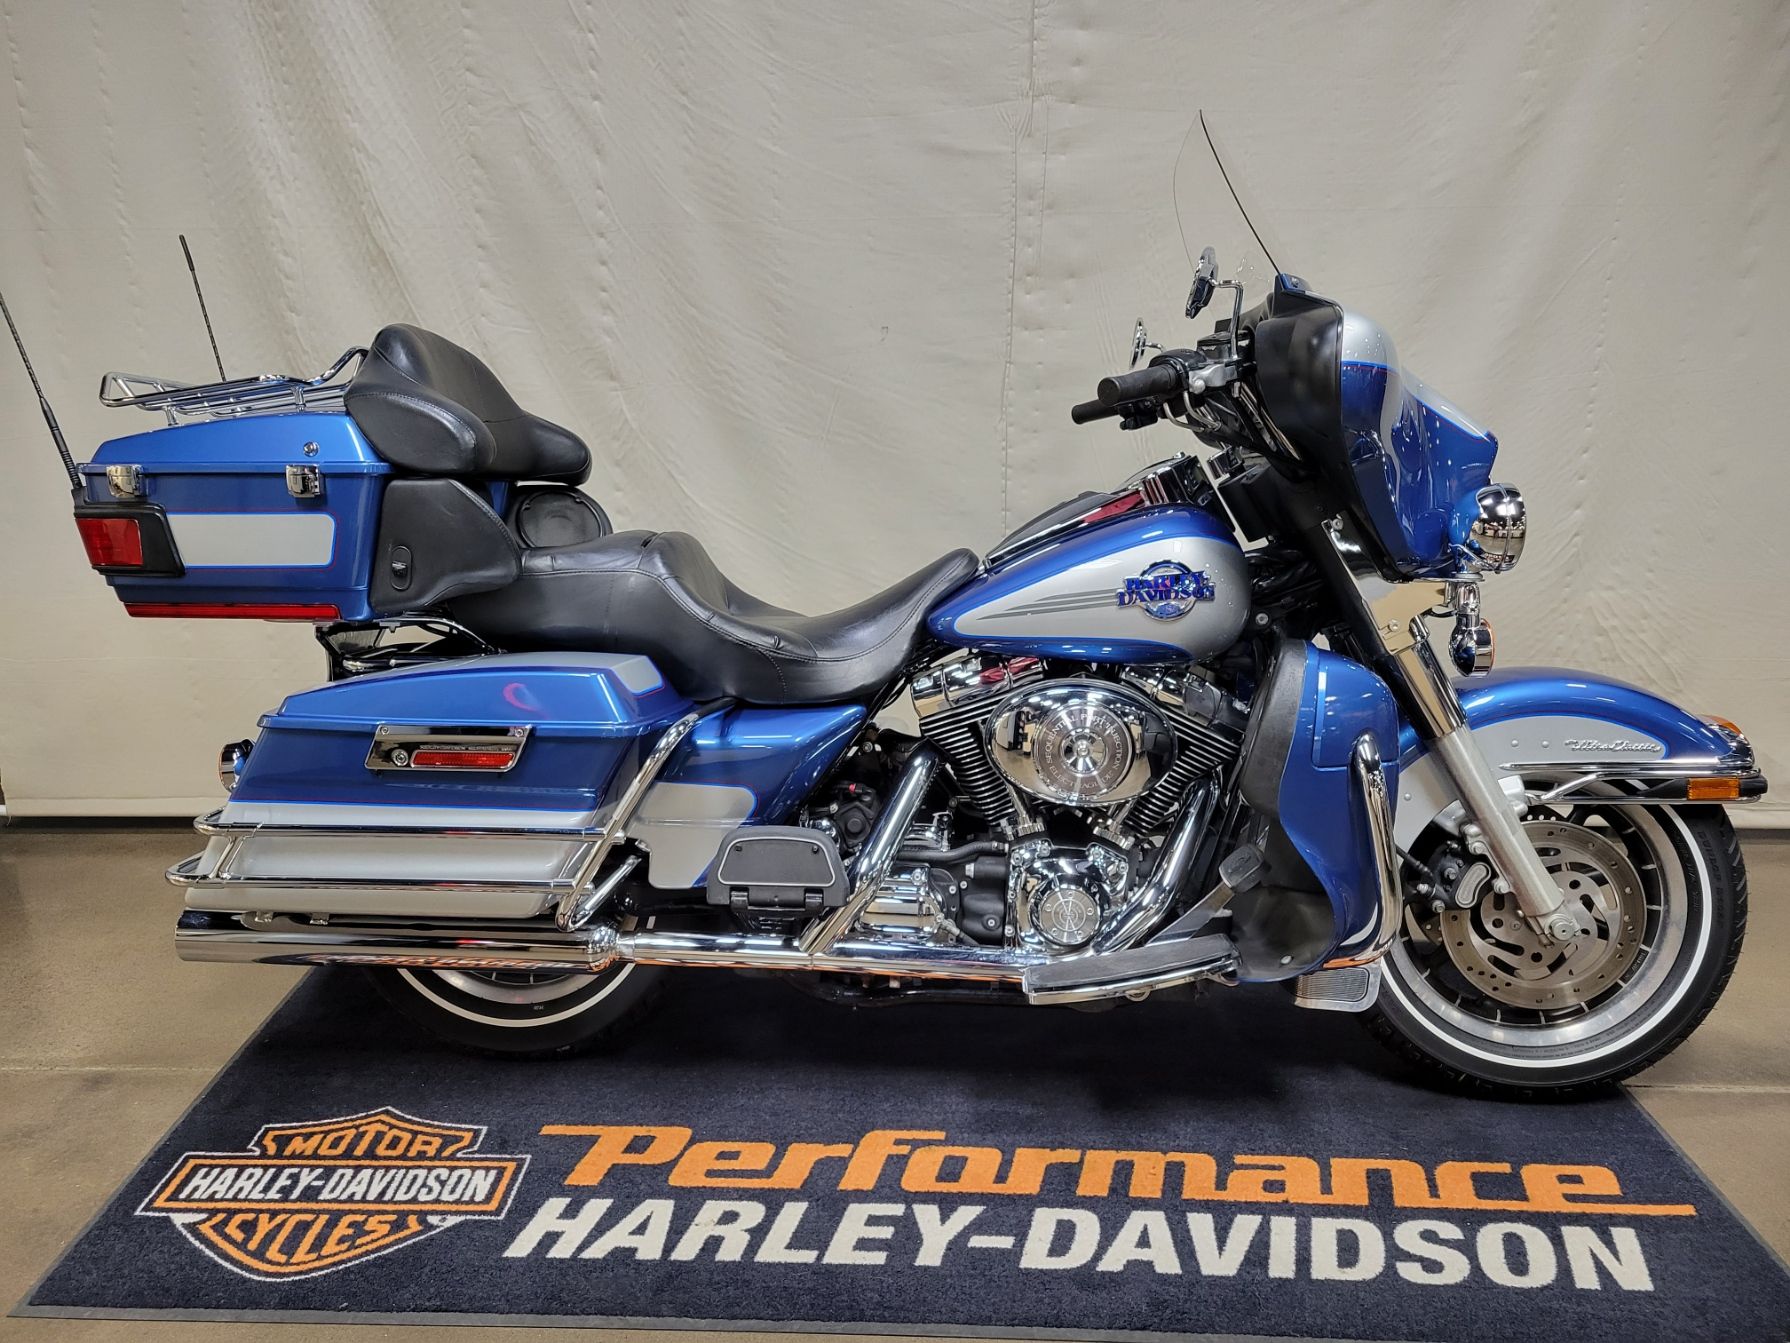 2006 Harley-Davidson Ultra Classic® Electra Glide® in Syracuse, New York - Photo 1